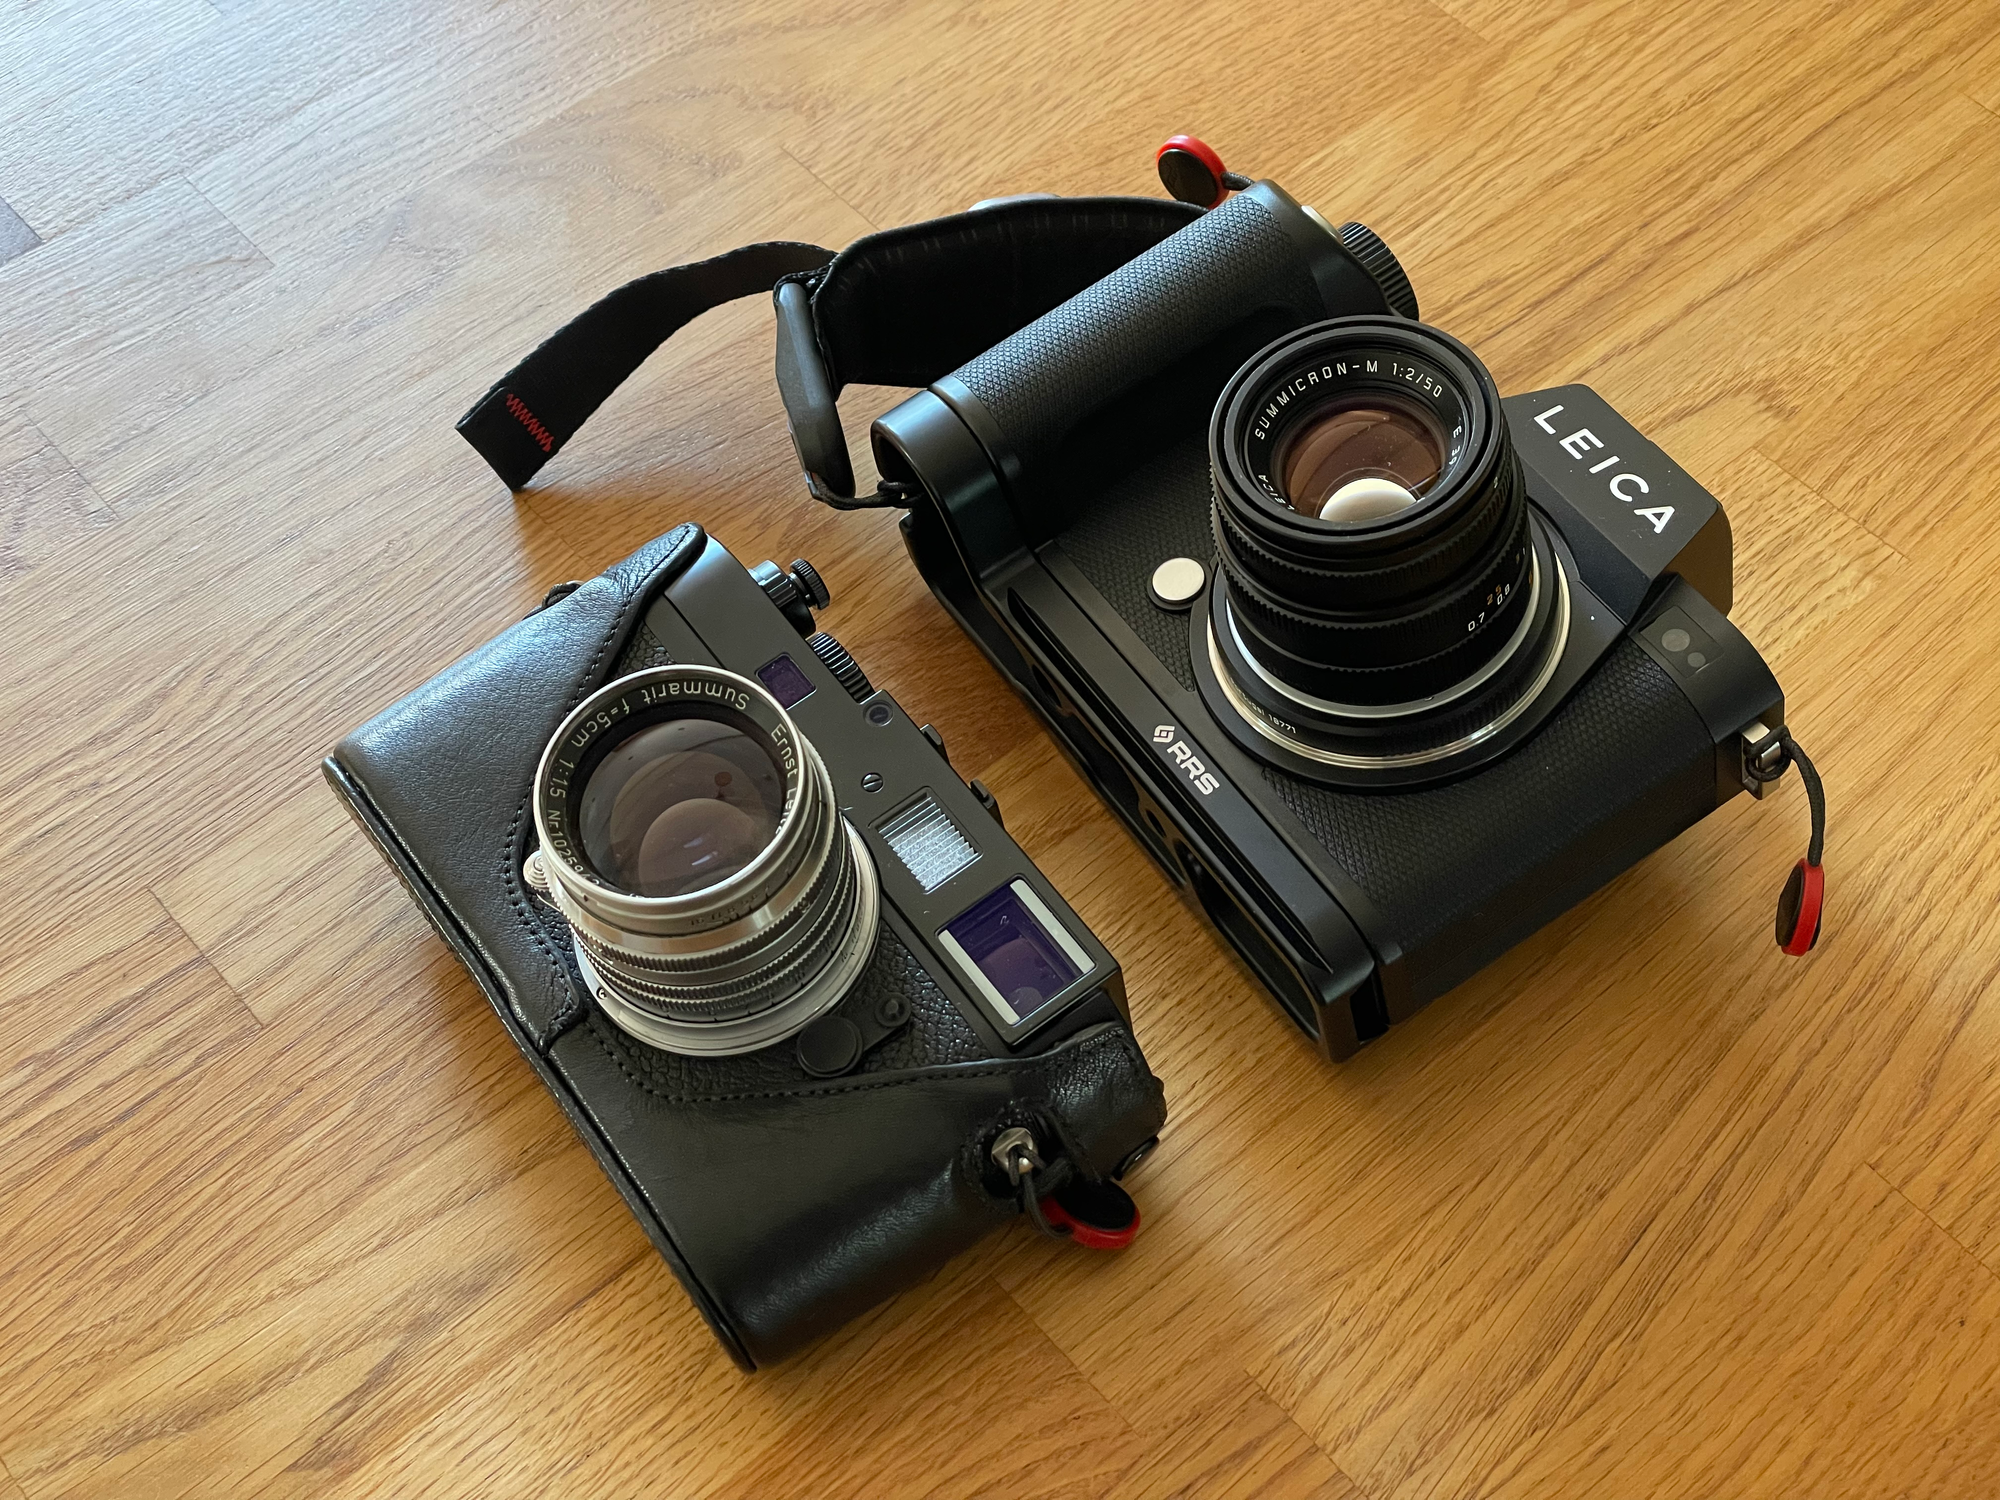 Leica SL2 + 50mm f/2 Summicron-M and Leica M9-P + 50mm f/1.5 Summarit